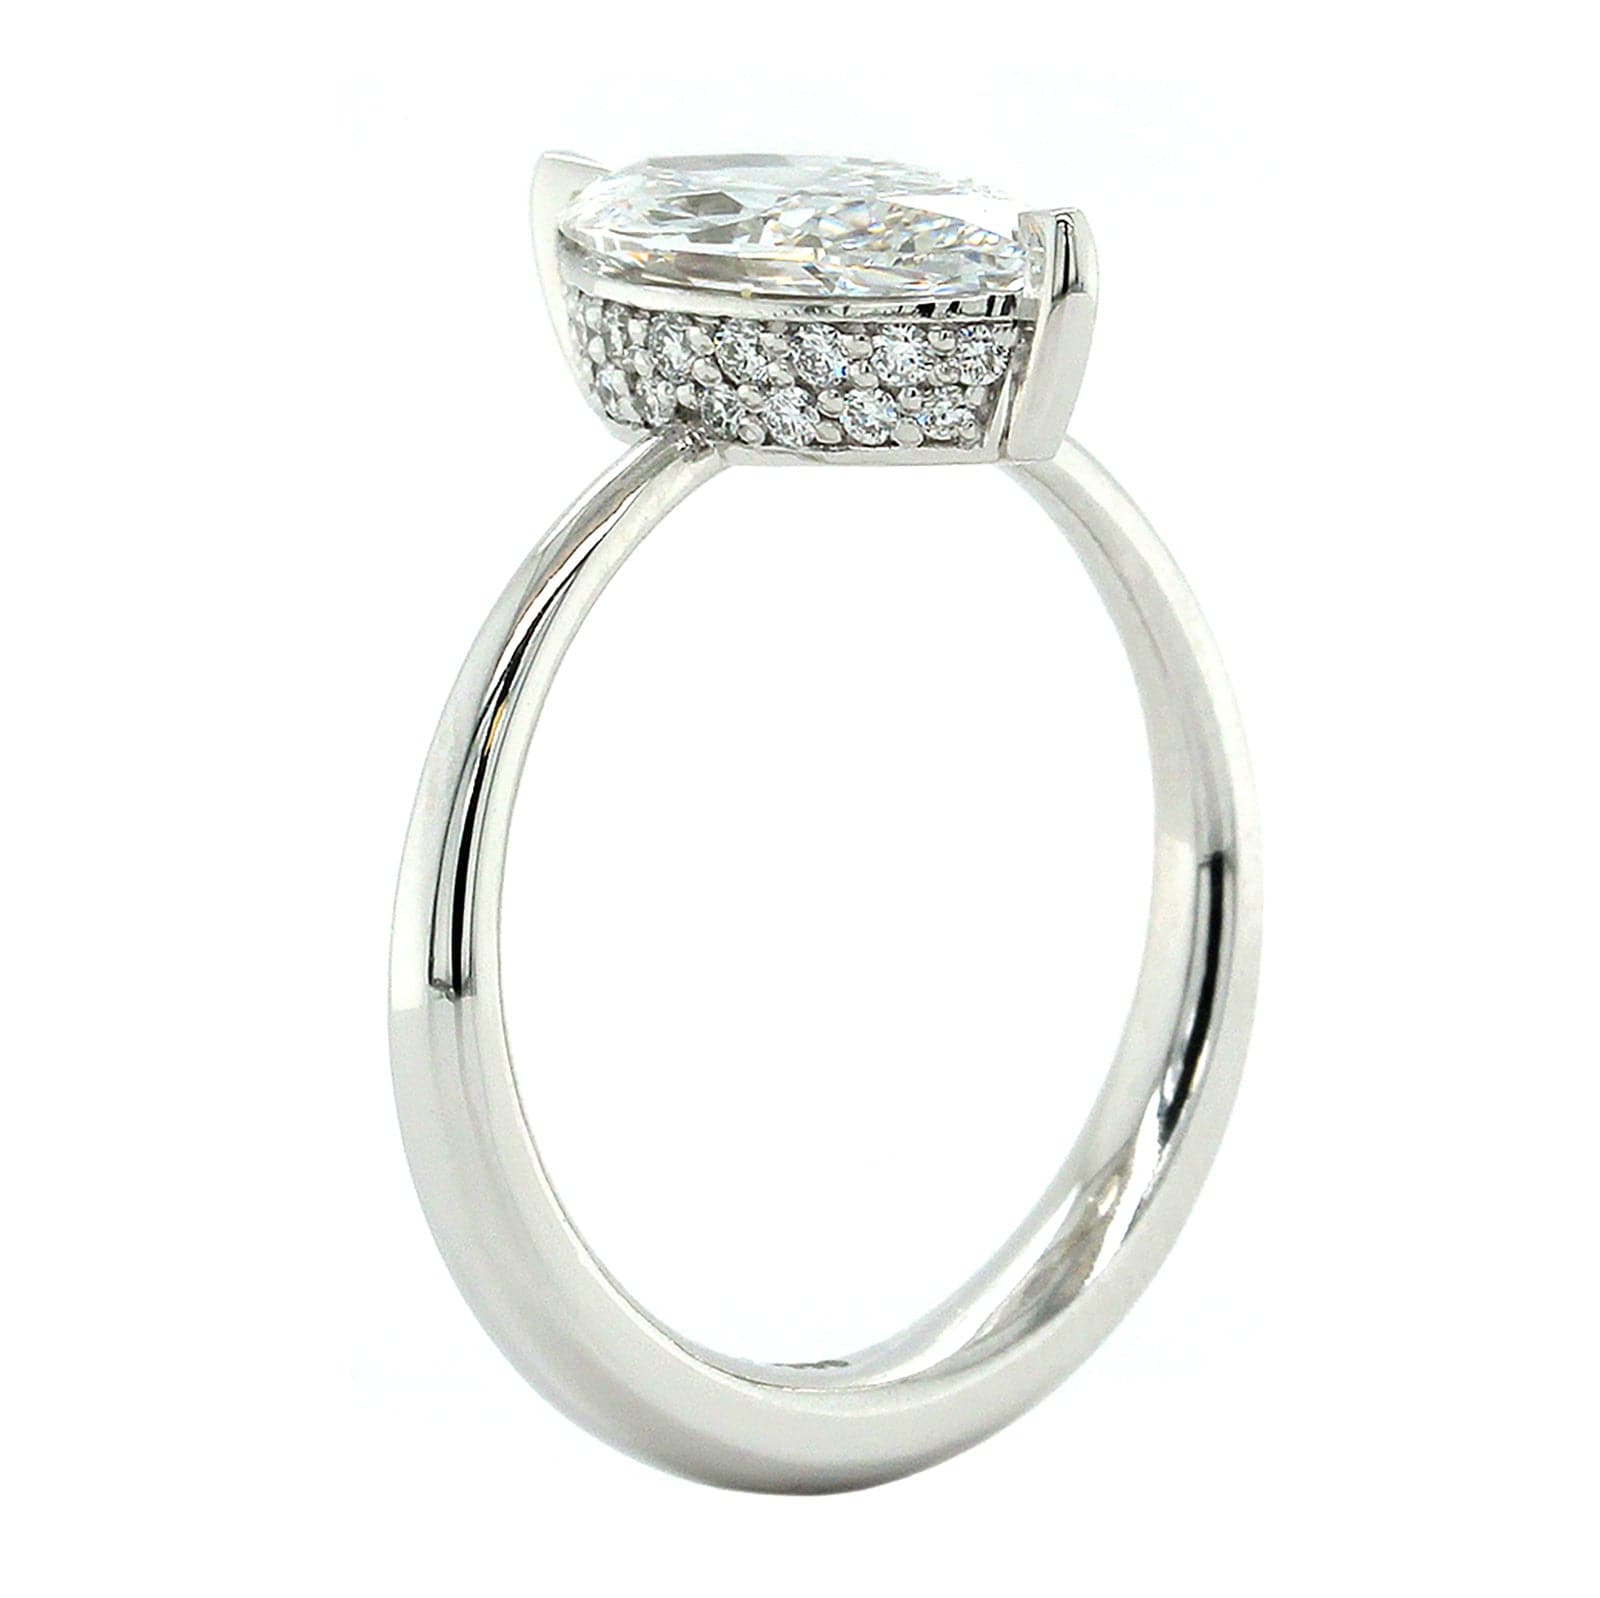 Platinum Solitaire Marquise Diamond Hidden Halo Engagement Ring